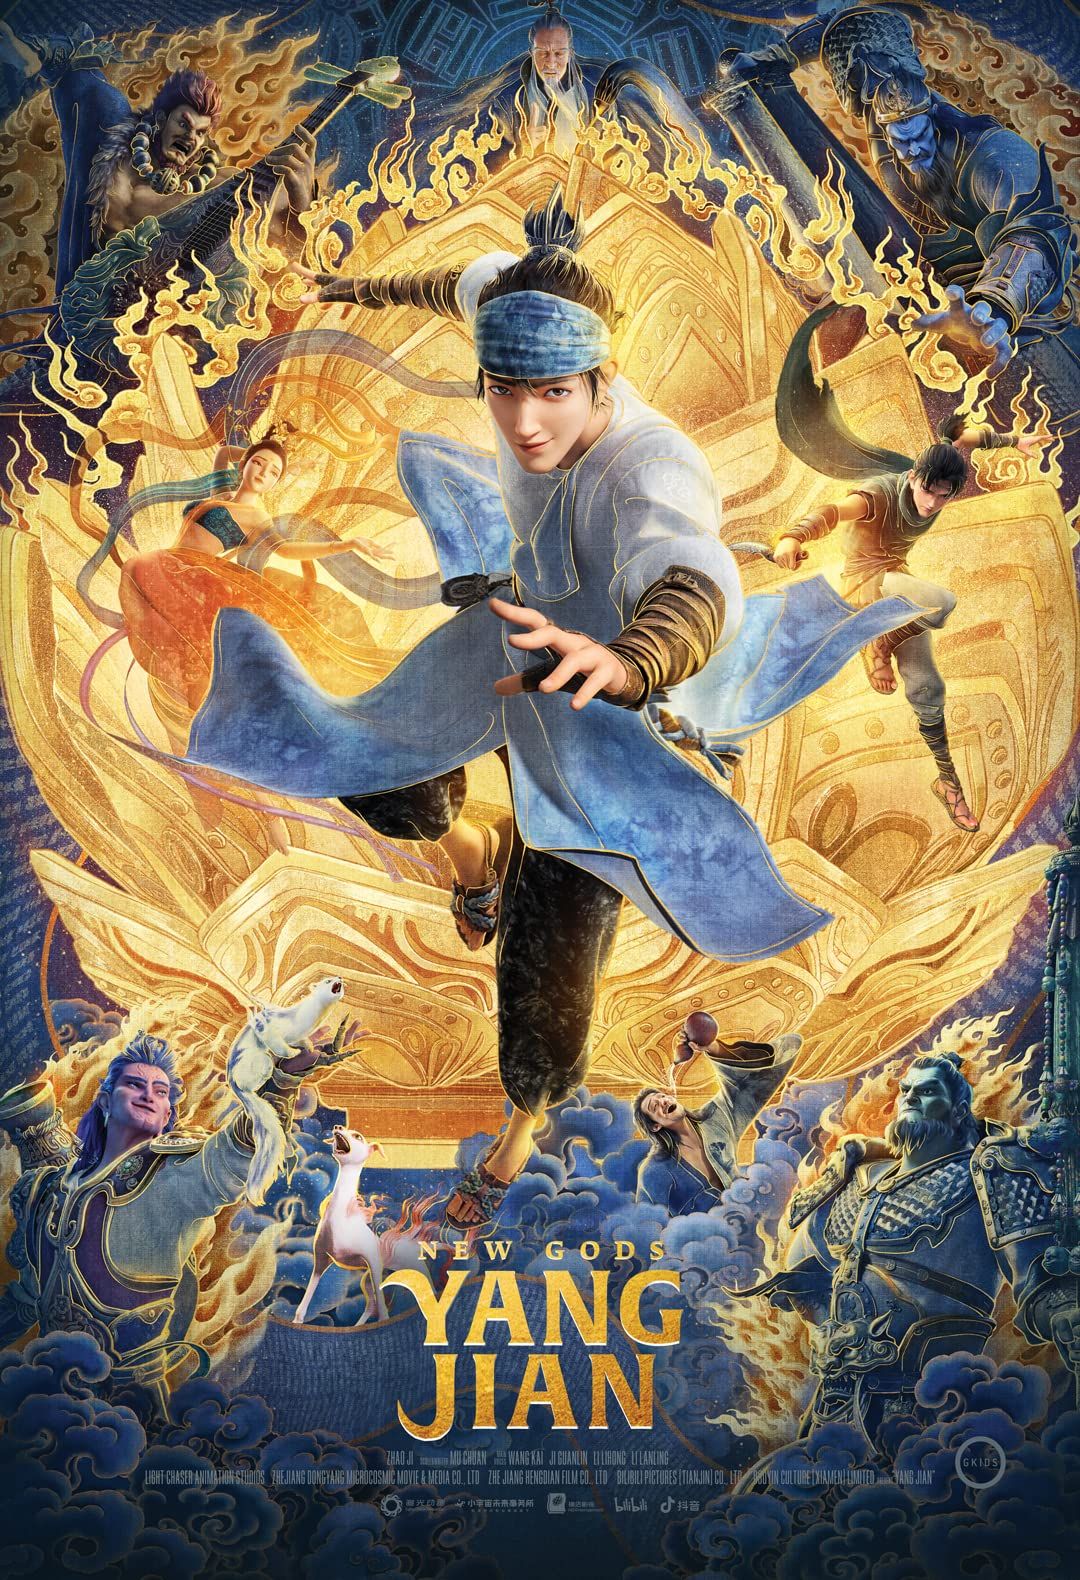 New Gods Yang Jian (2022) English